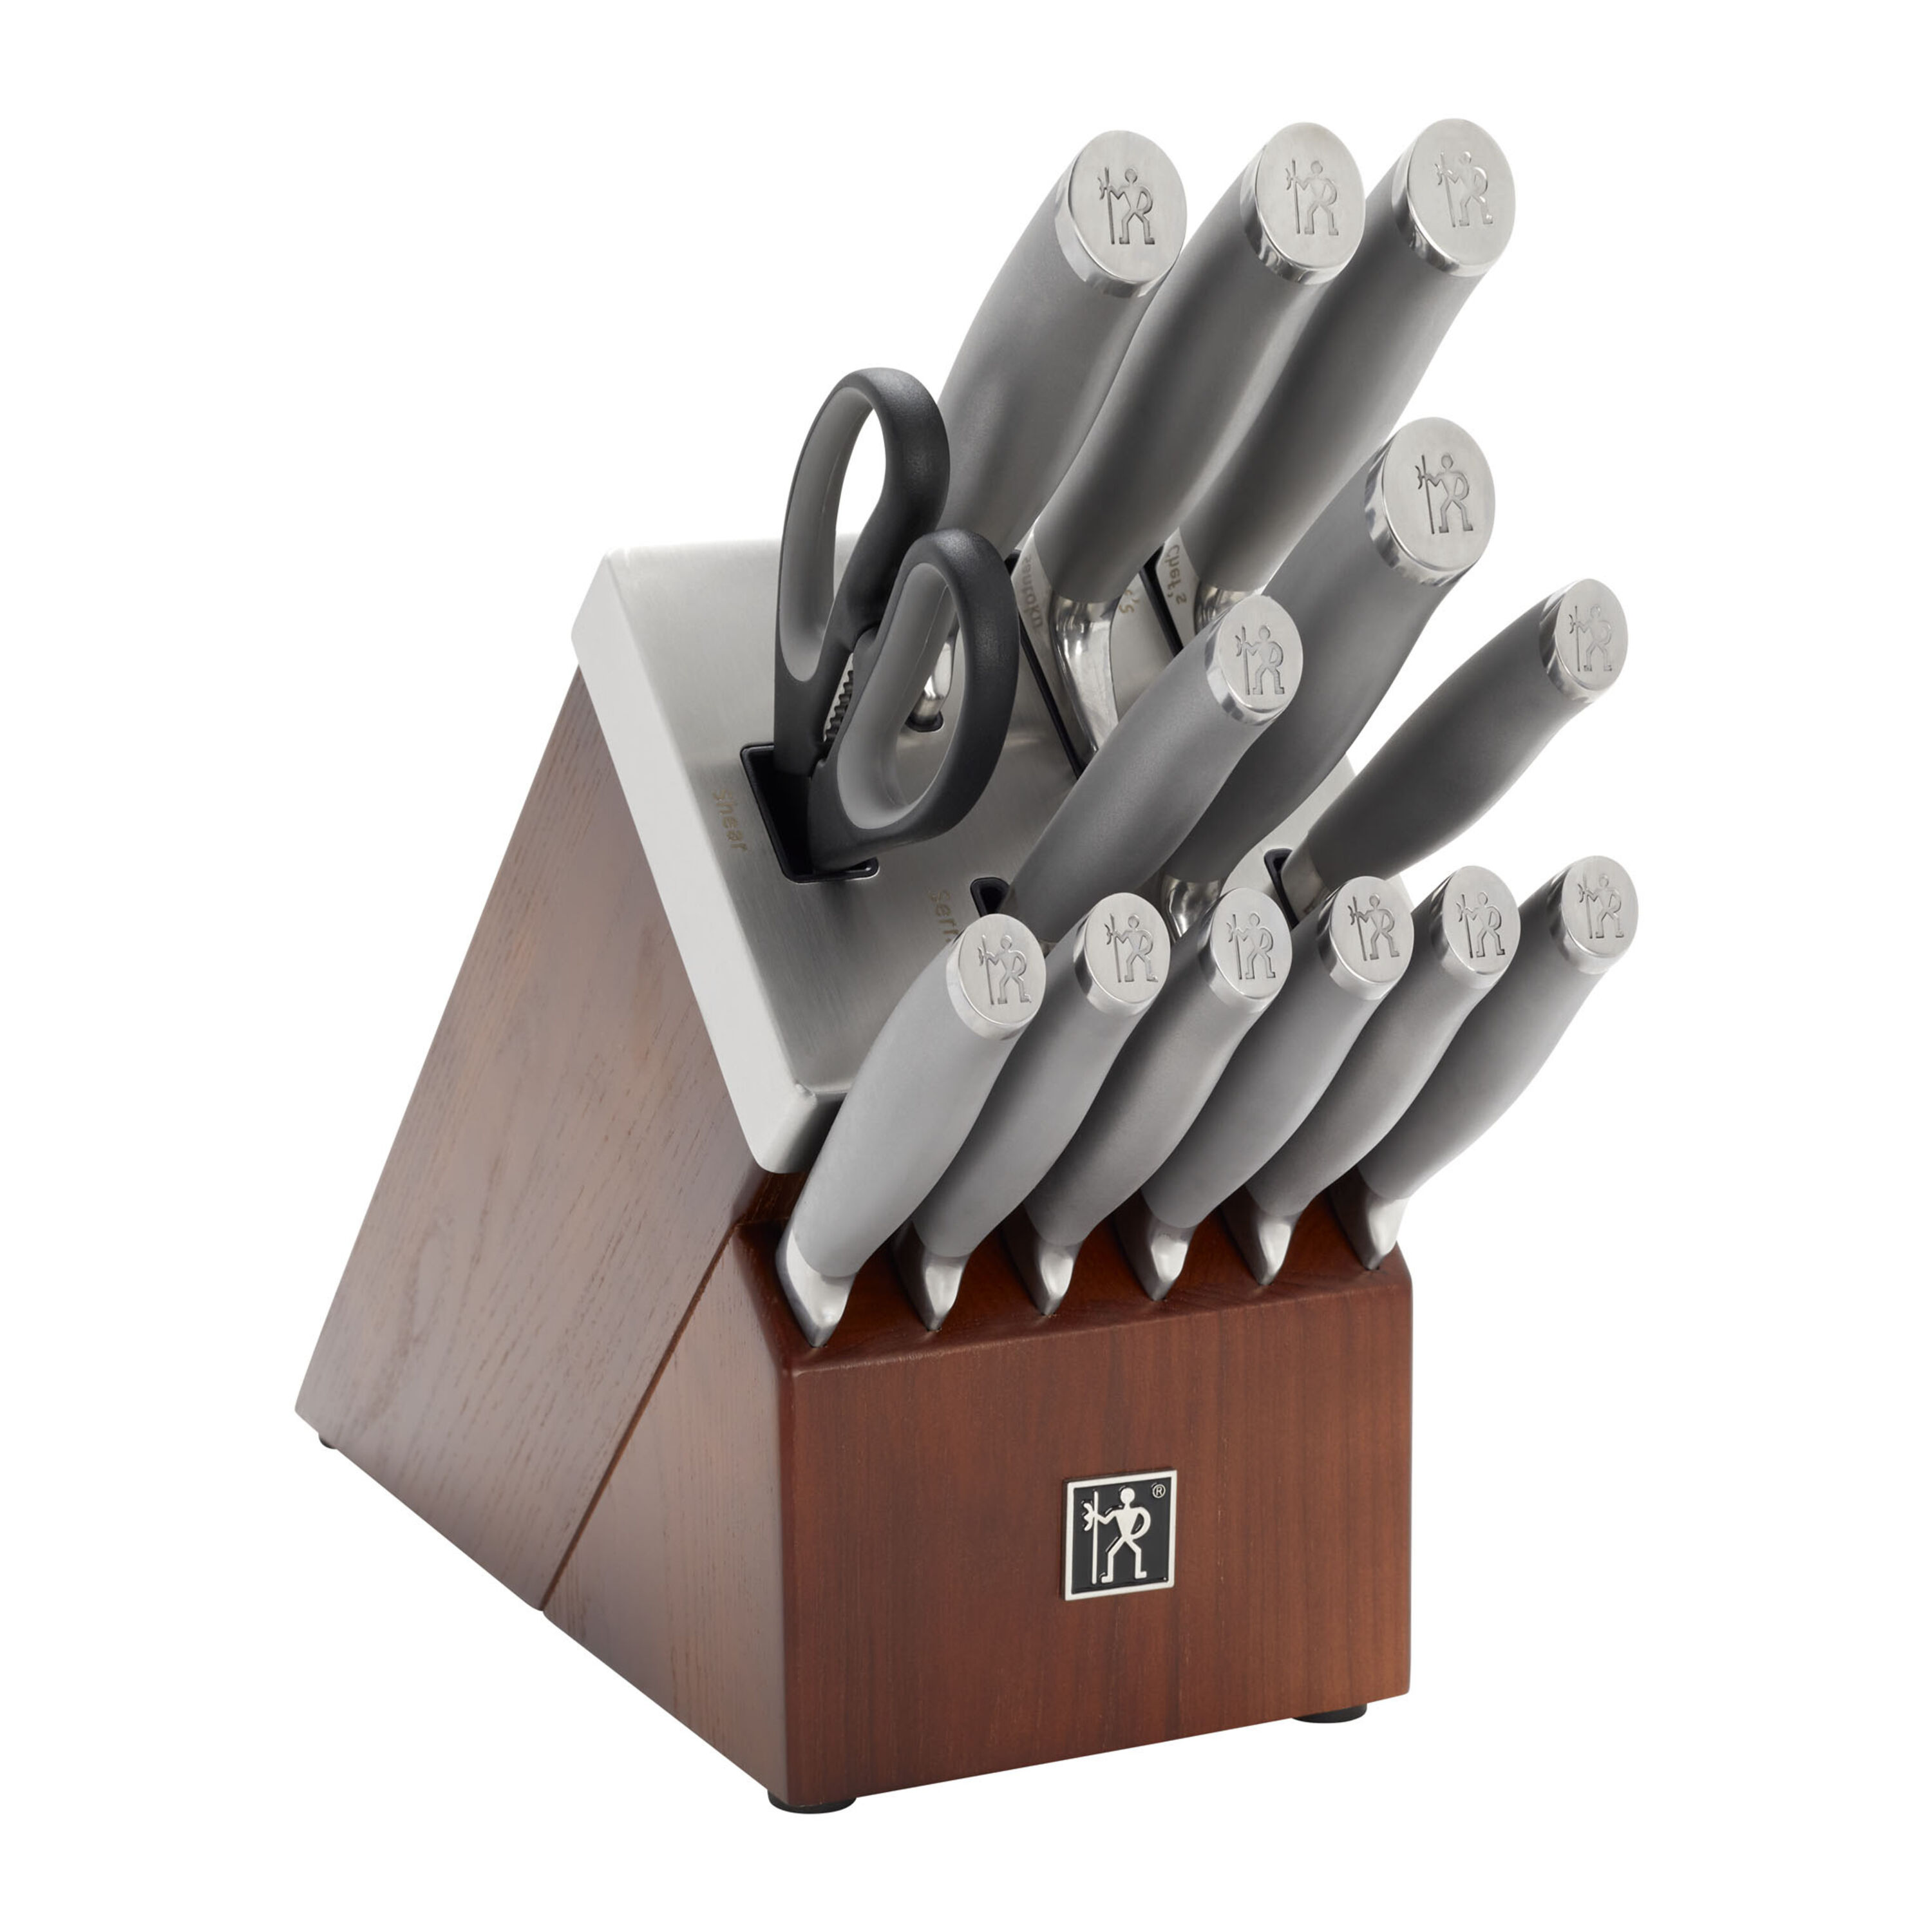 Henckels Modernist 14-pc Self-Sharpening Knife Set with Block